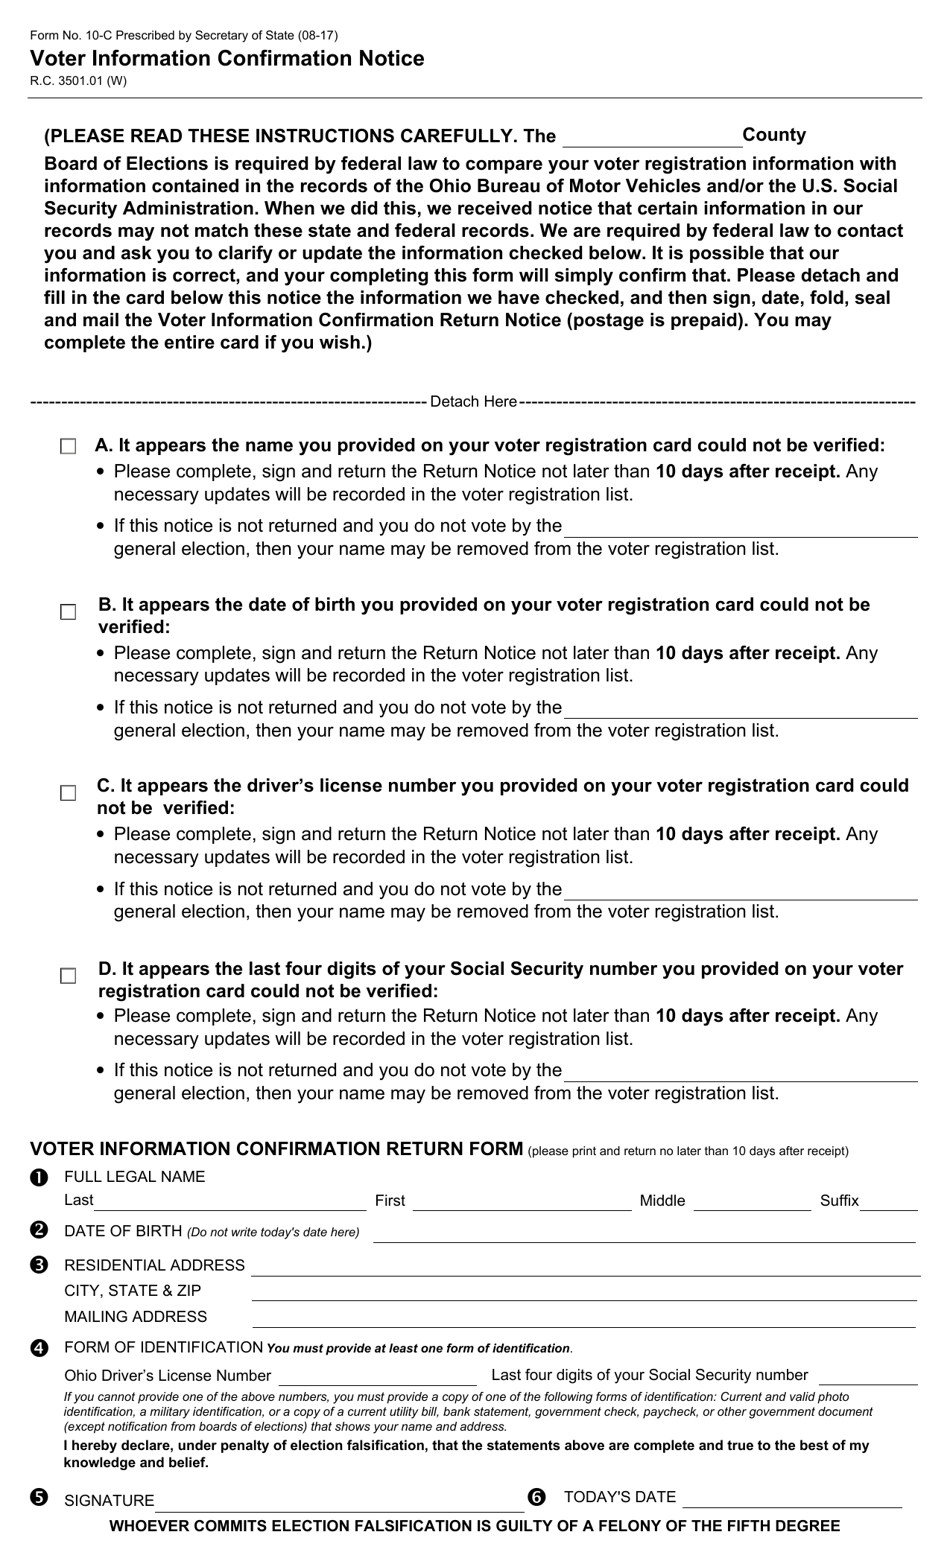 Form 10-C Voter Information Confirmation Notice - Ohio, Page 1